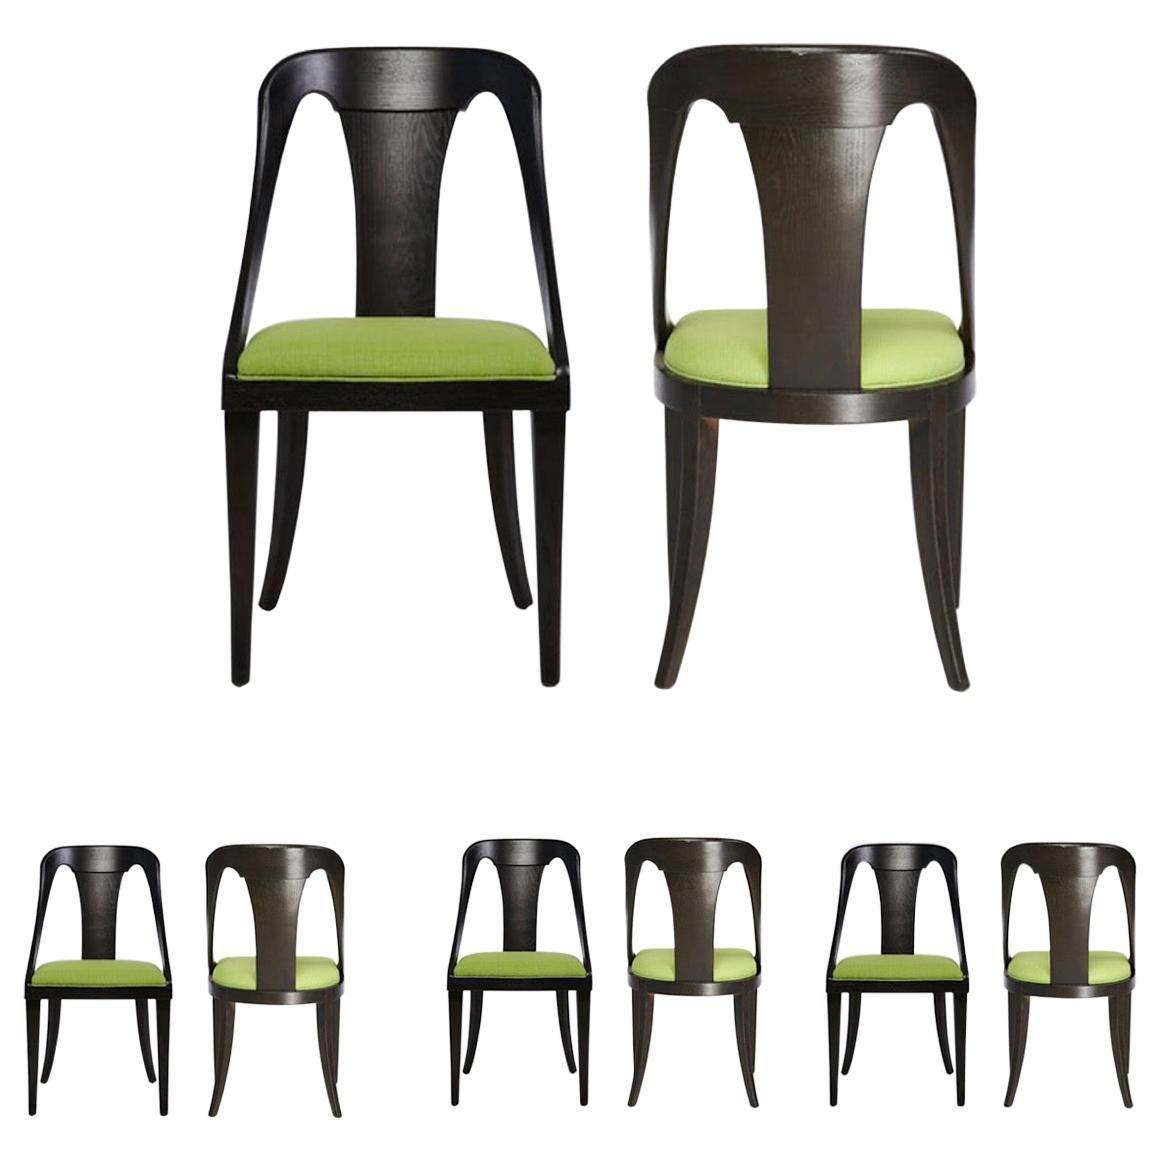 Set of 8 Midcentury Dining Chairs Designed by Jack Van der Molen